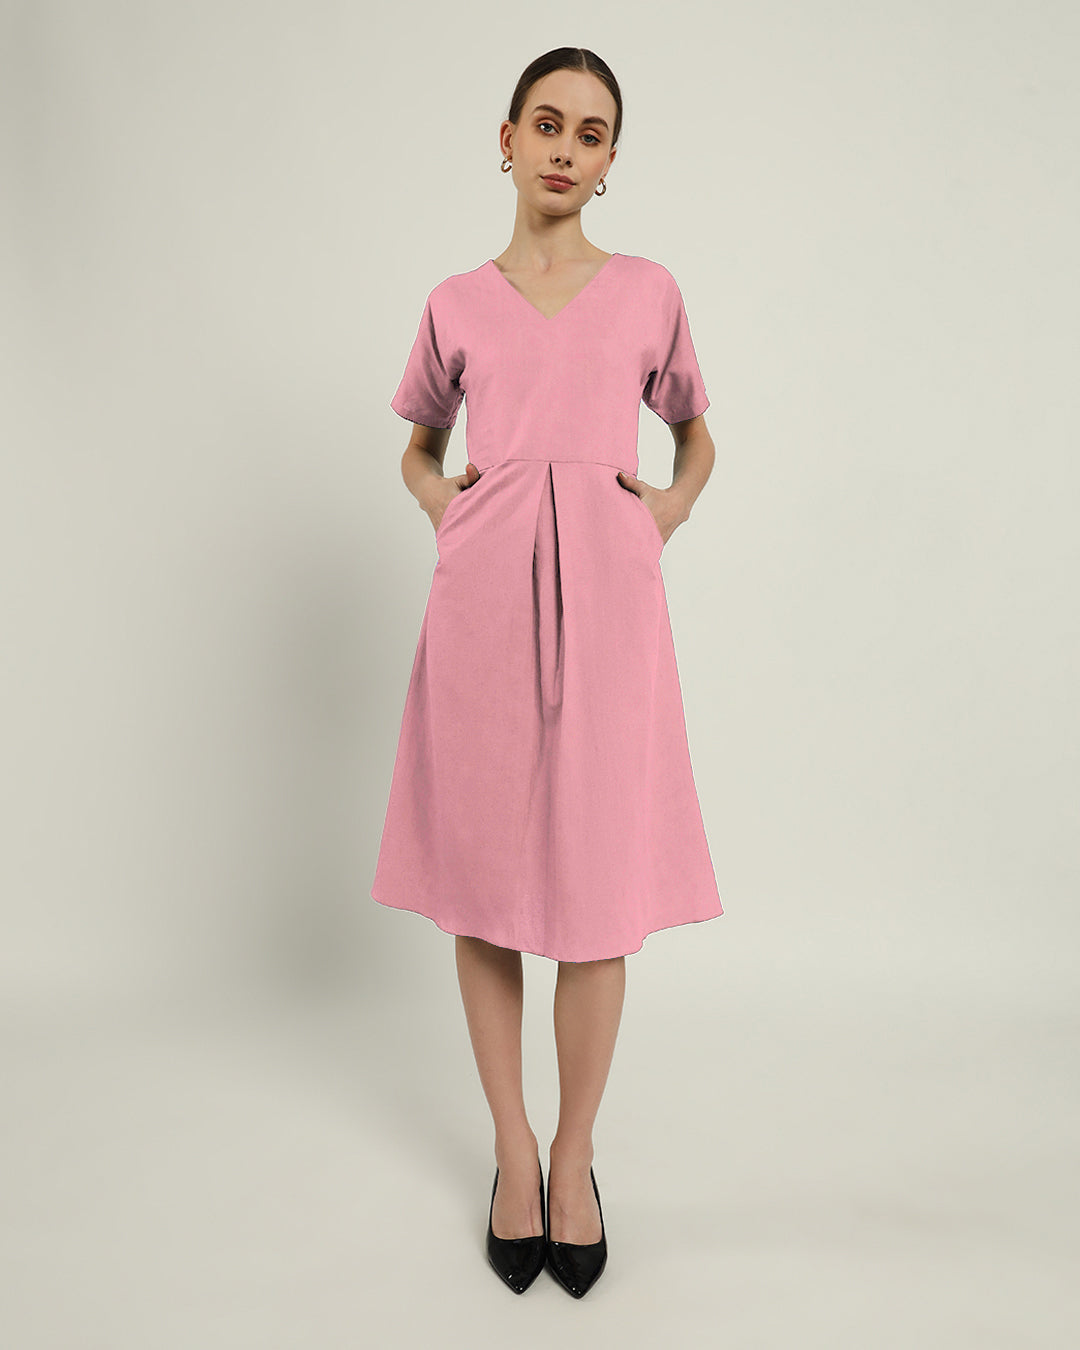 The Memphis Fondant Pink Cotton Dress